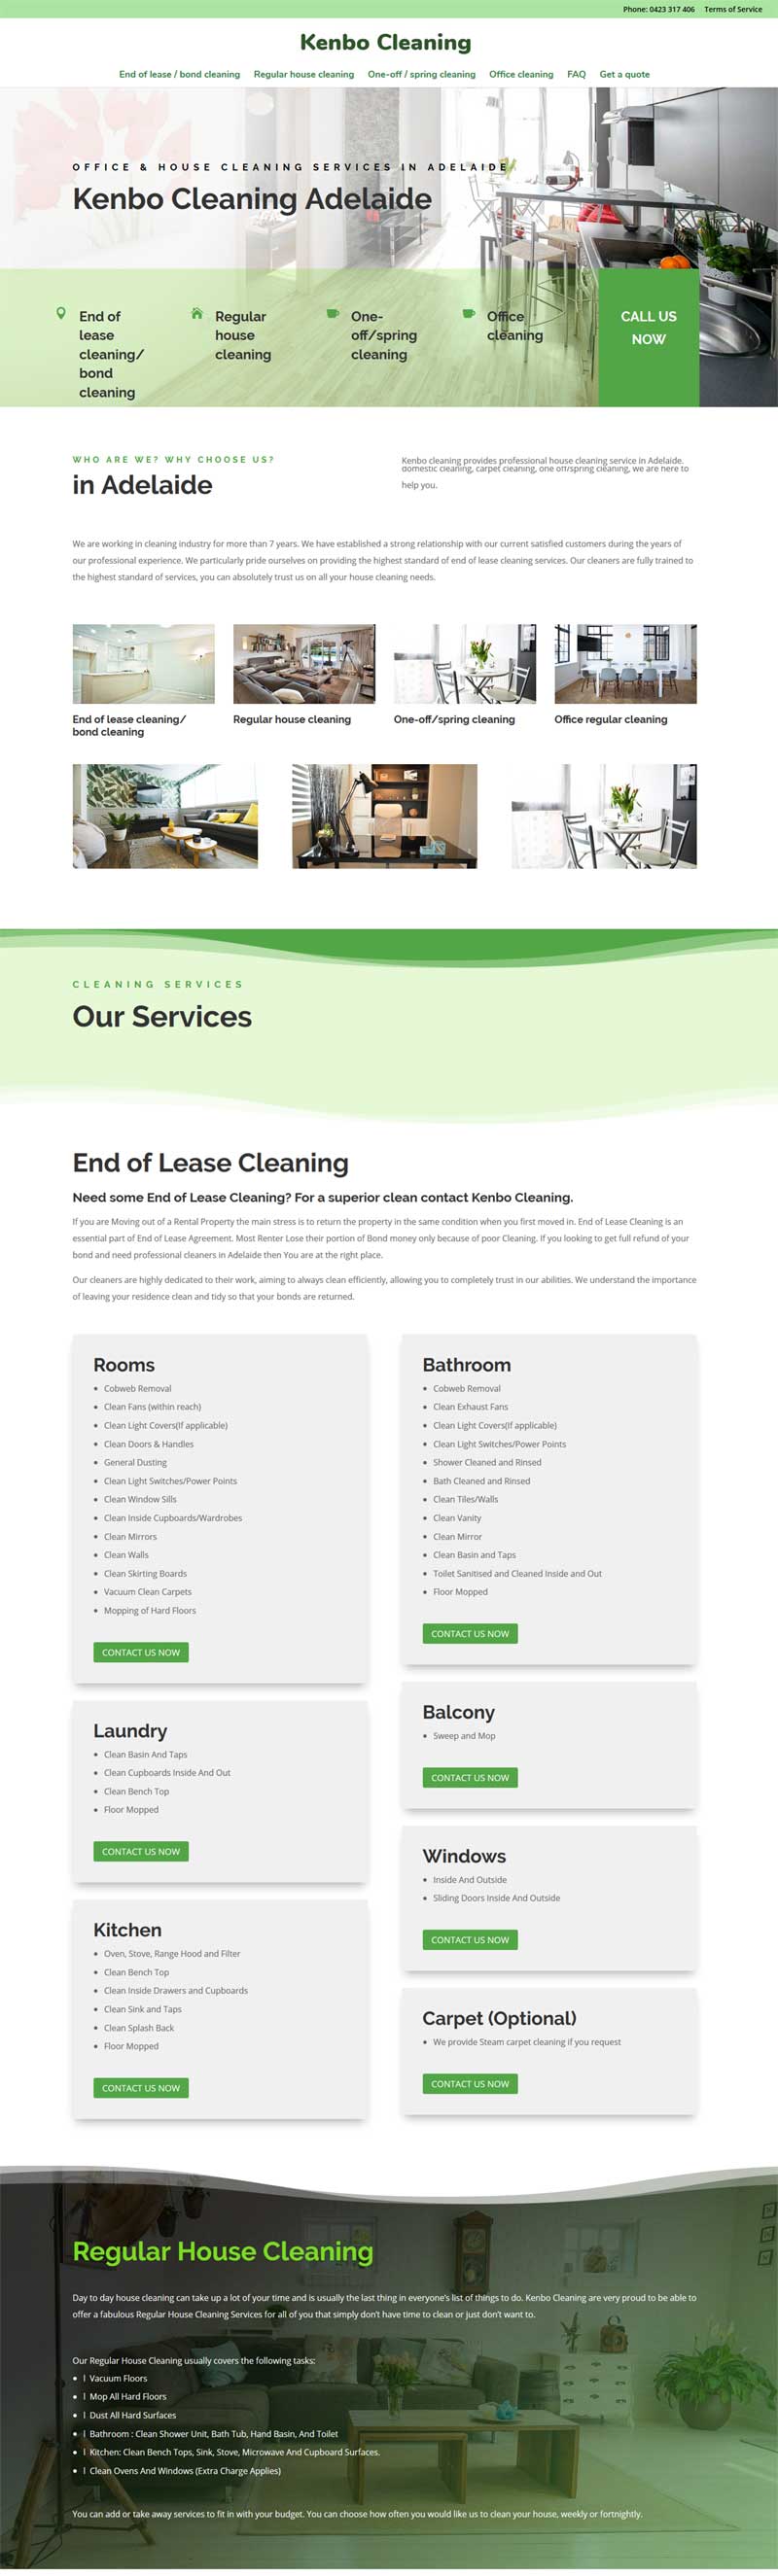 website design for kenbo cleaning services adelaide